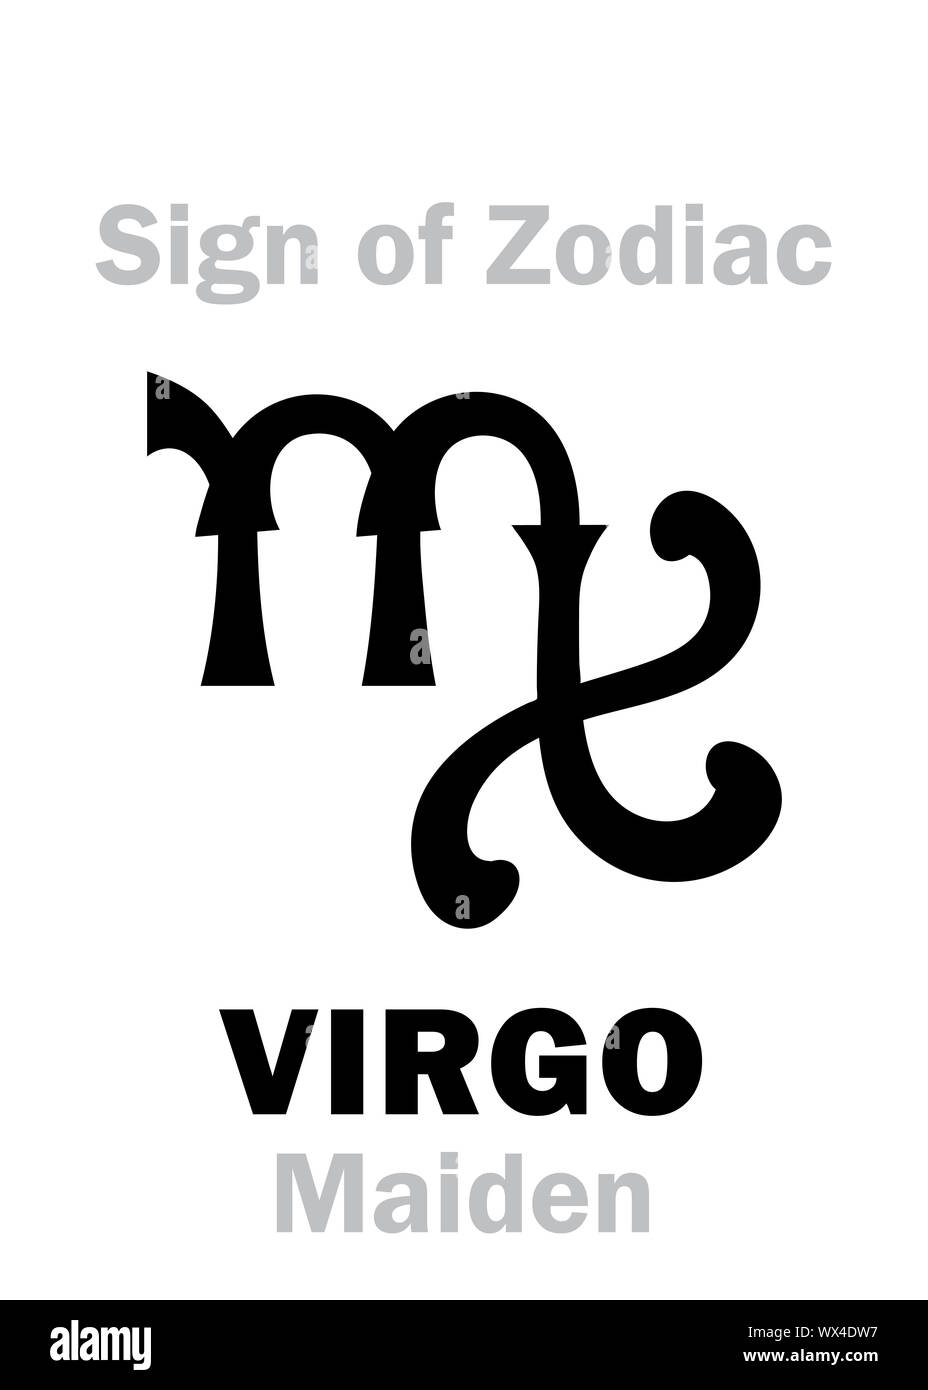 Astrology: Sign of Zodiac VIRGO (The Maiden) Stock Photo